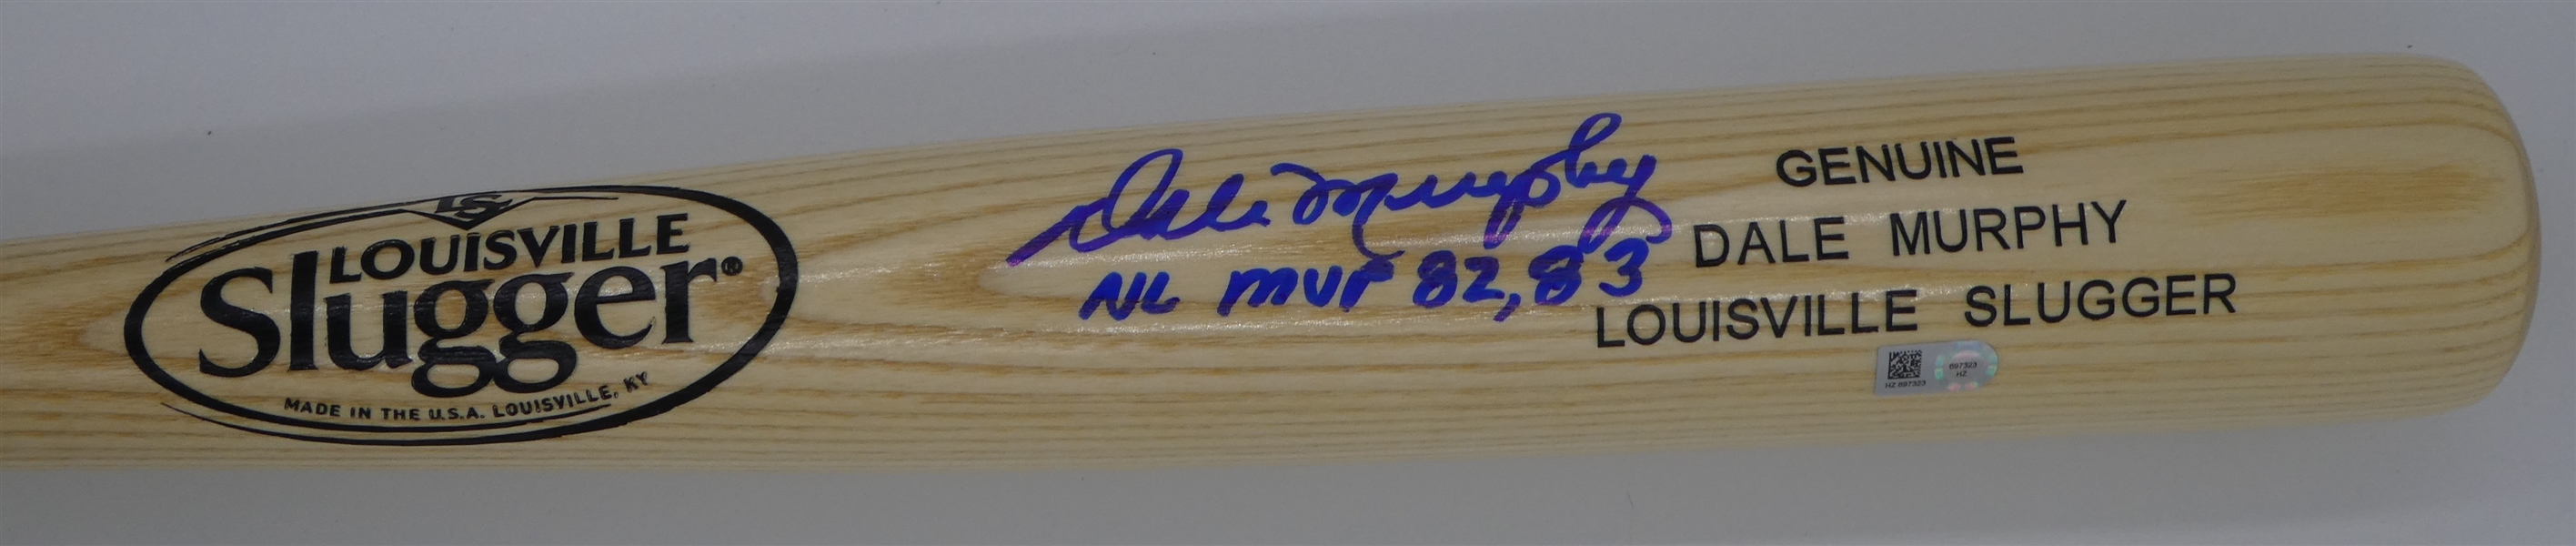 Dale Murphy "NL MVP 82,83" Autographed Blonde Louisville Slugger Bat MLB Authenticated